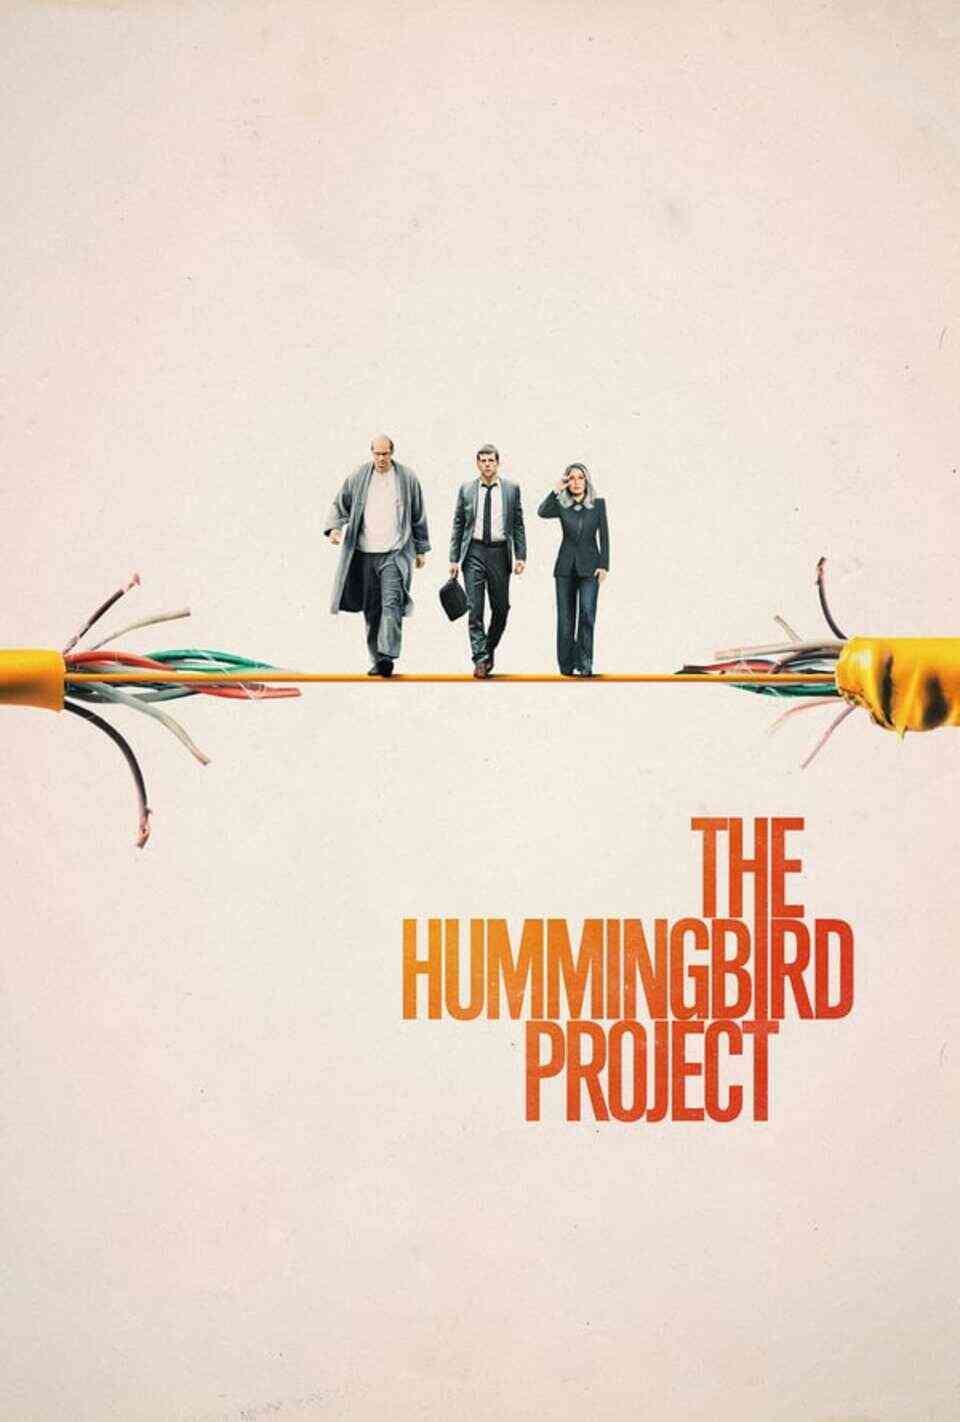 Read The Hummingbird Project screenplay (poster)